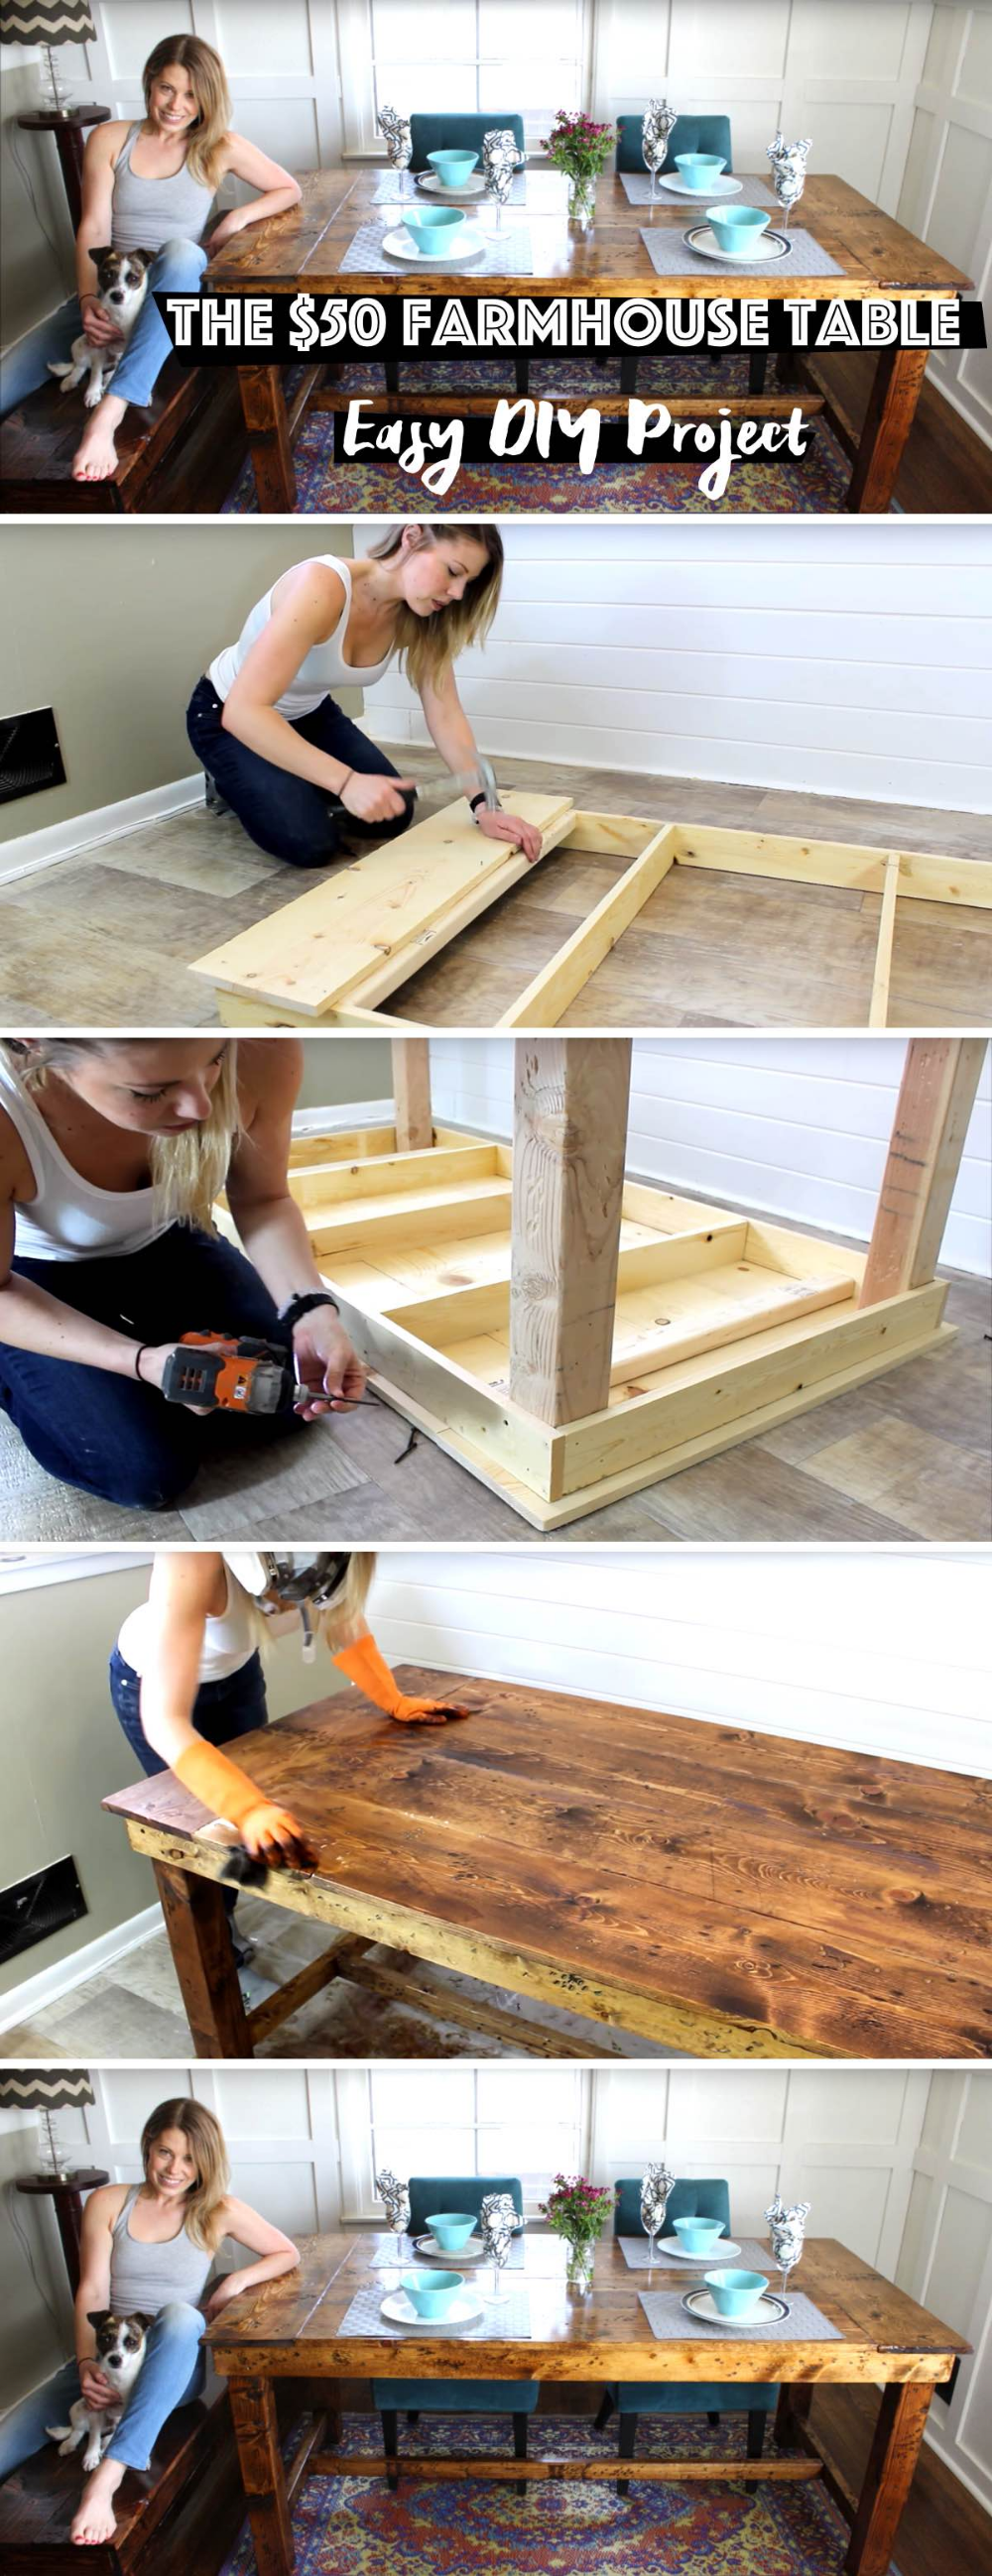 The $50 Farmhouse Table - Easy DIY Project - The $50 Farmhouse Table - Easy DIY Project -   16 diy Table wood ideas